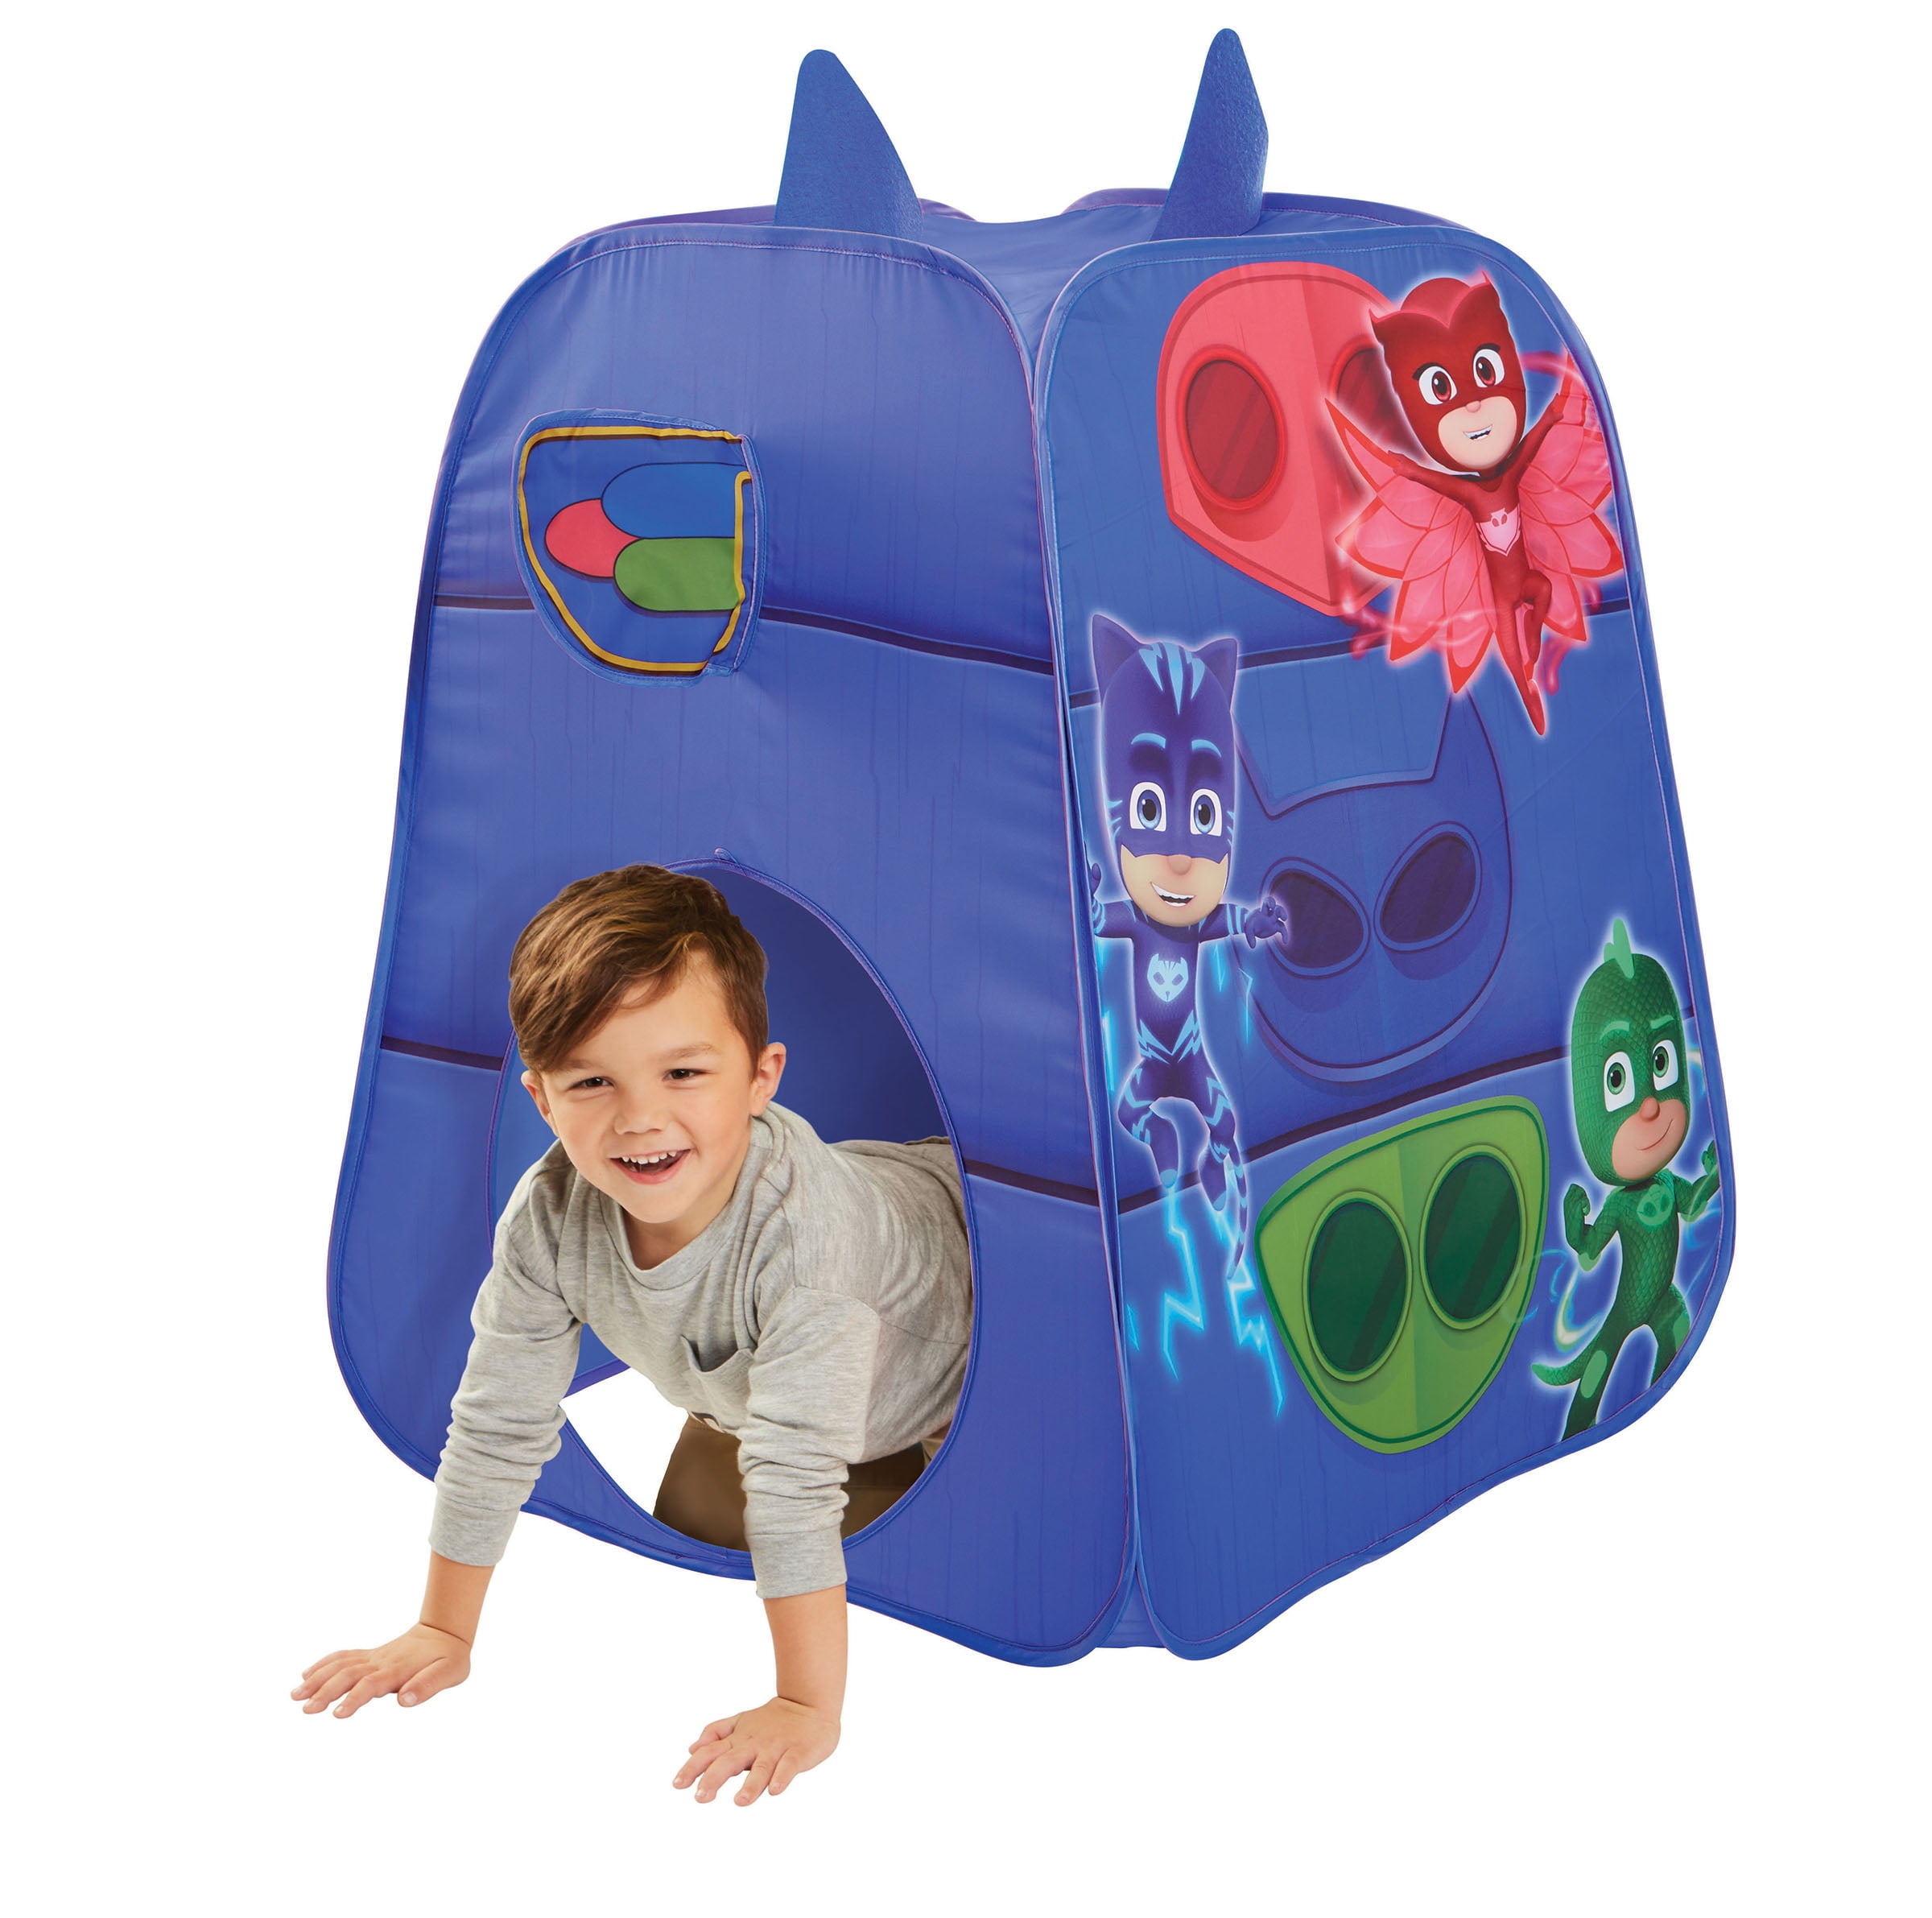 Official PJ Masks Pop Up Folding Tent Indoor Outdoor Camping Play House Den 7457 